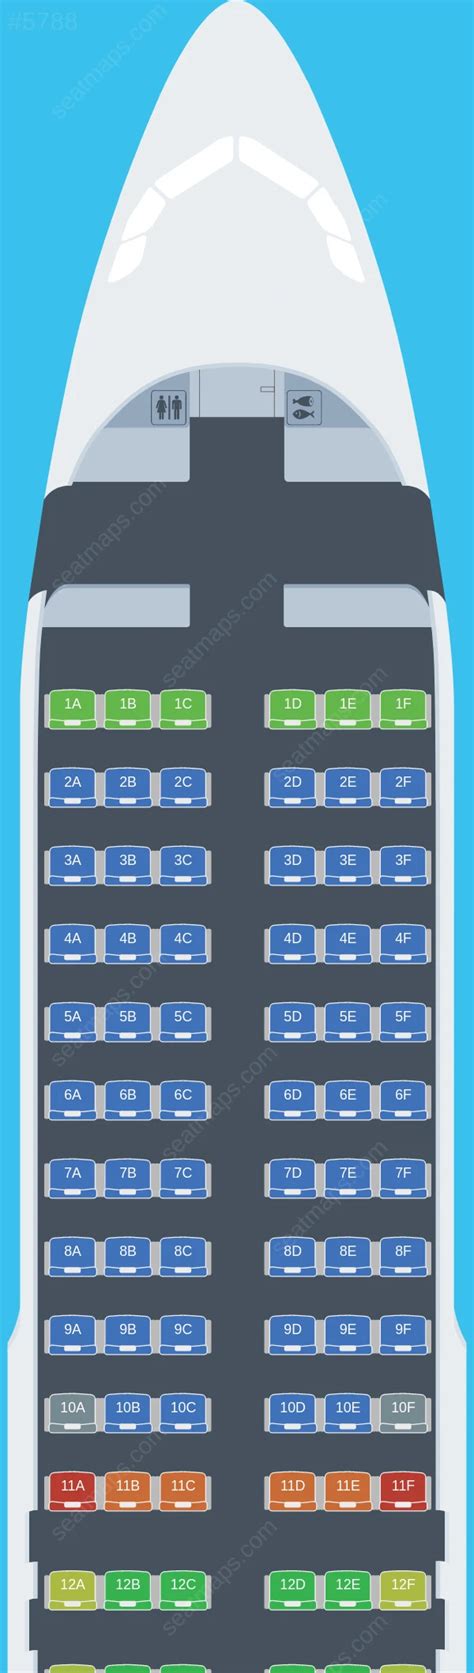 Seat Map Ratings Of Finnair Airbus A320